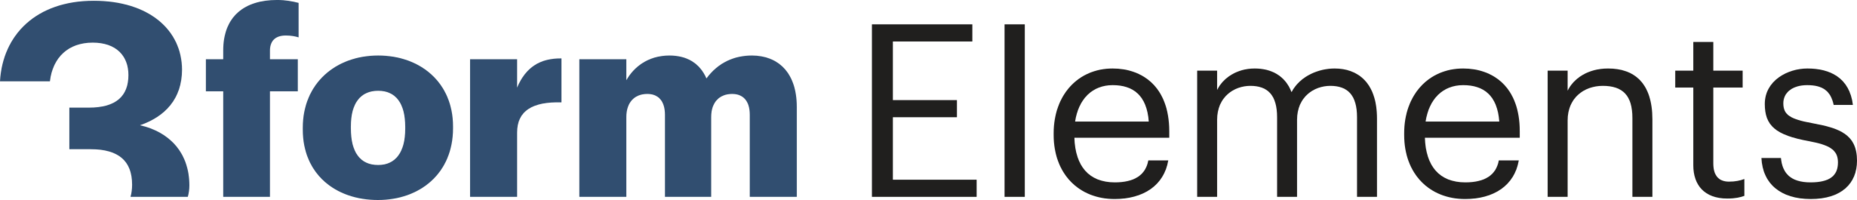 3form Elements Logo